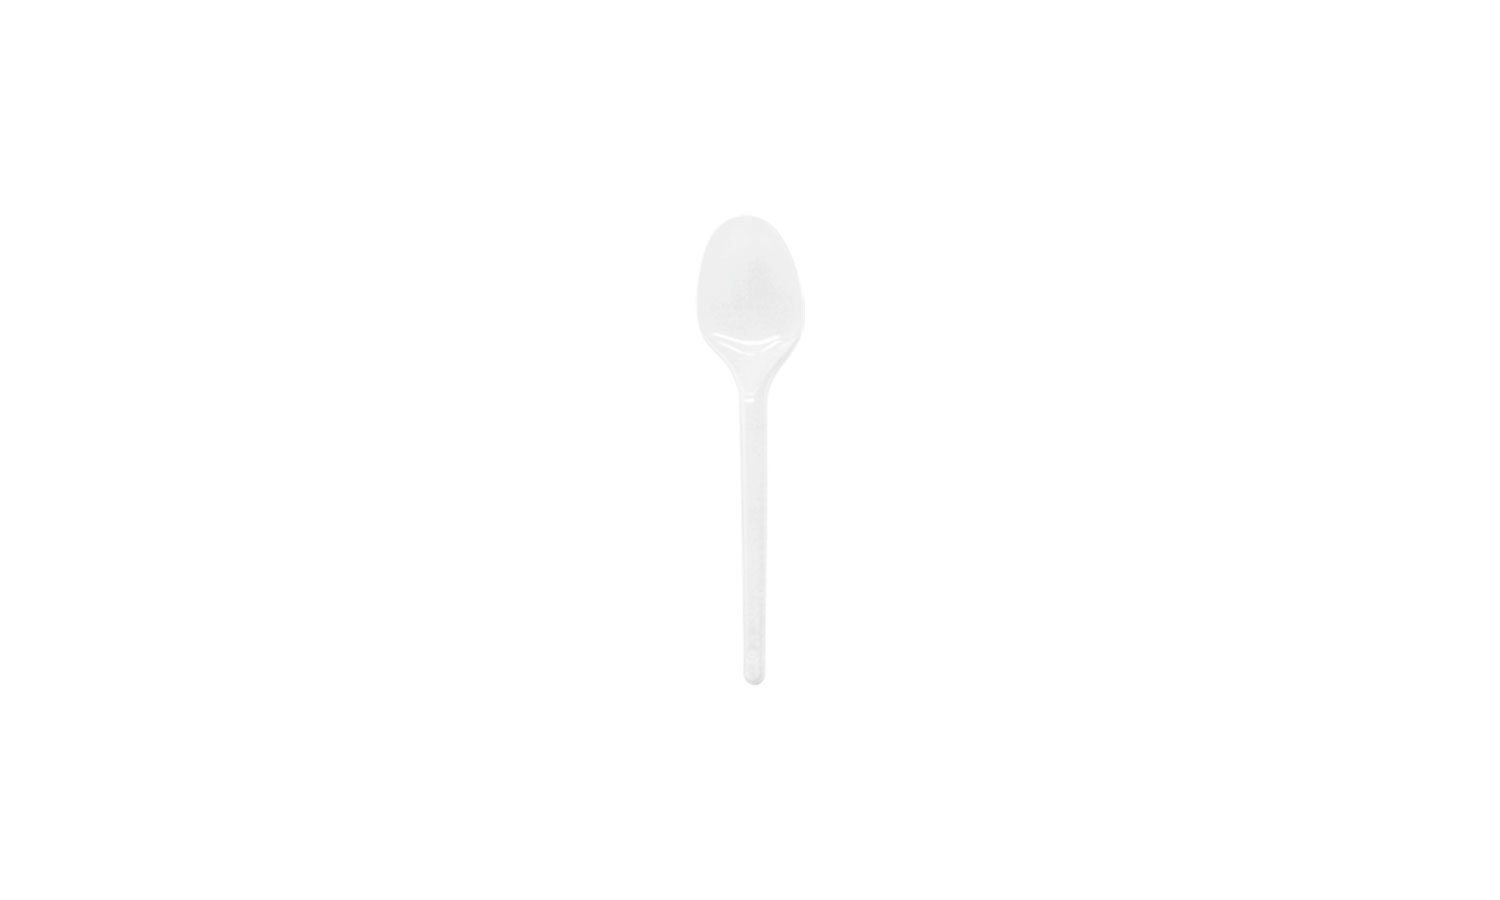 Dessert Spoon